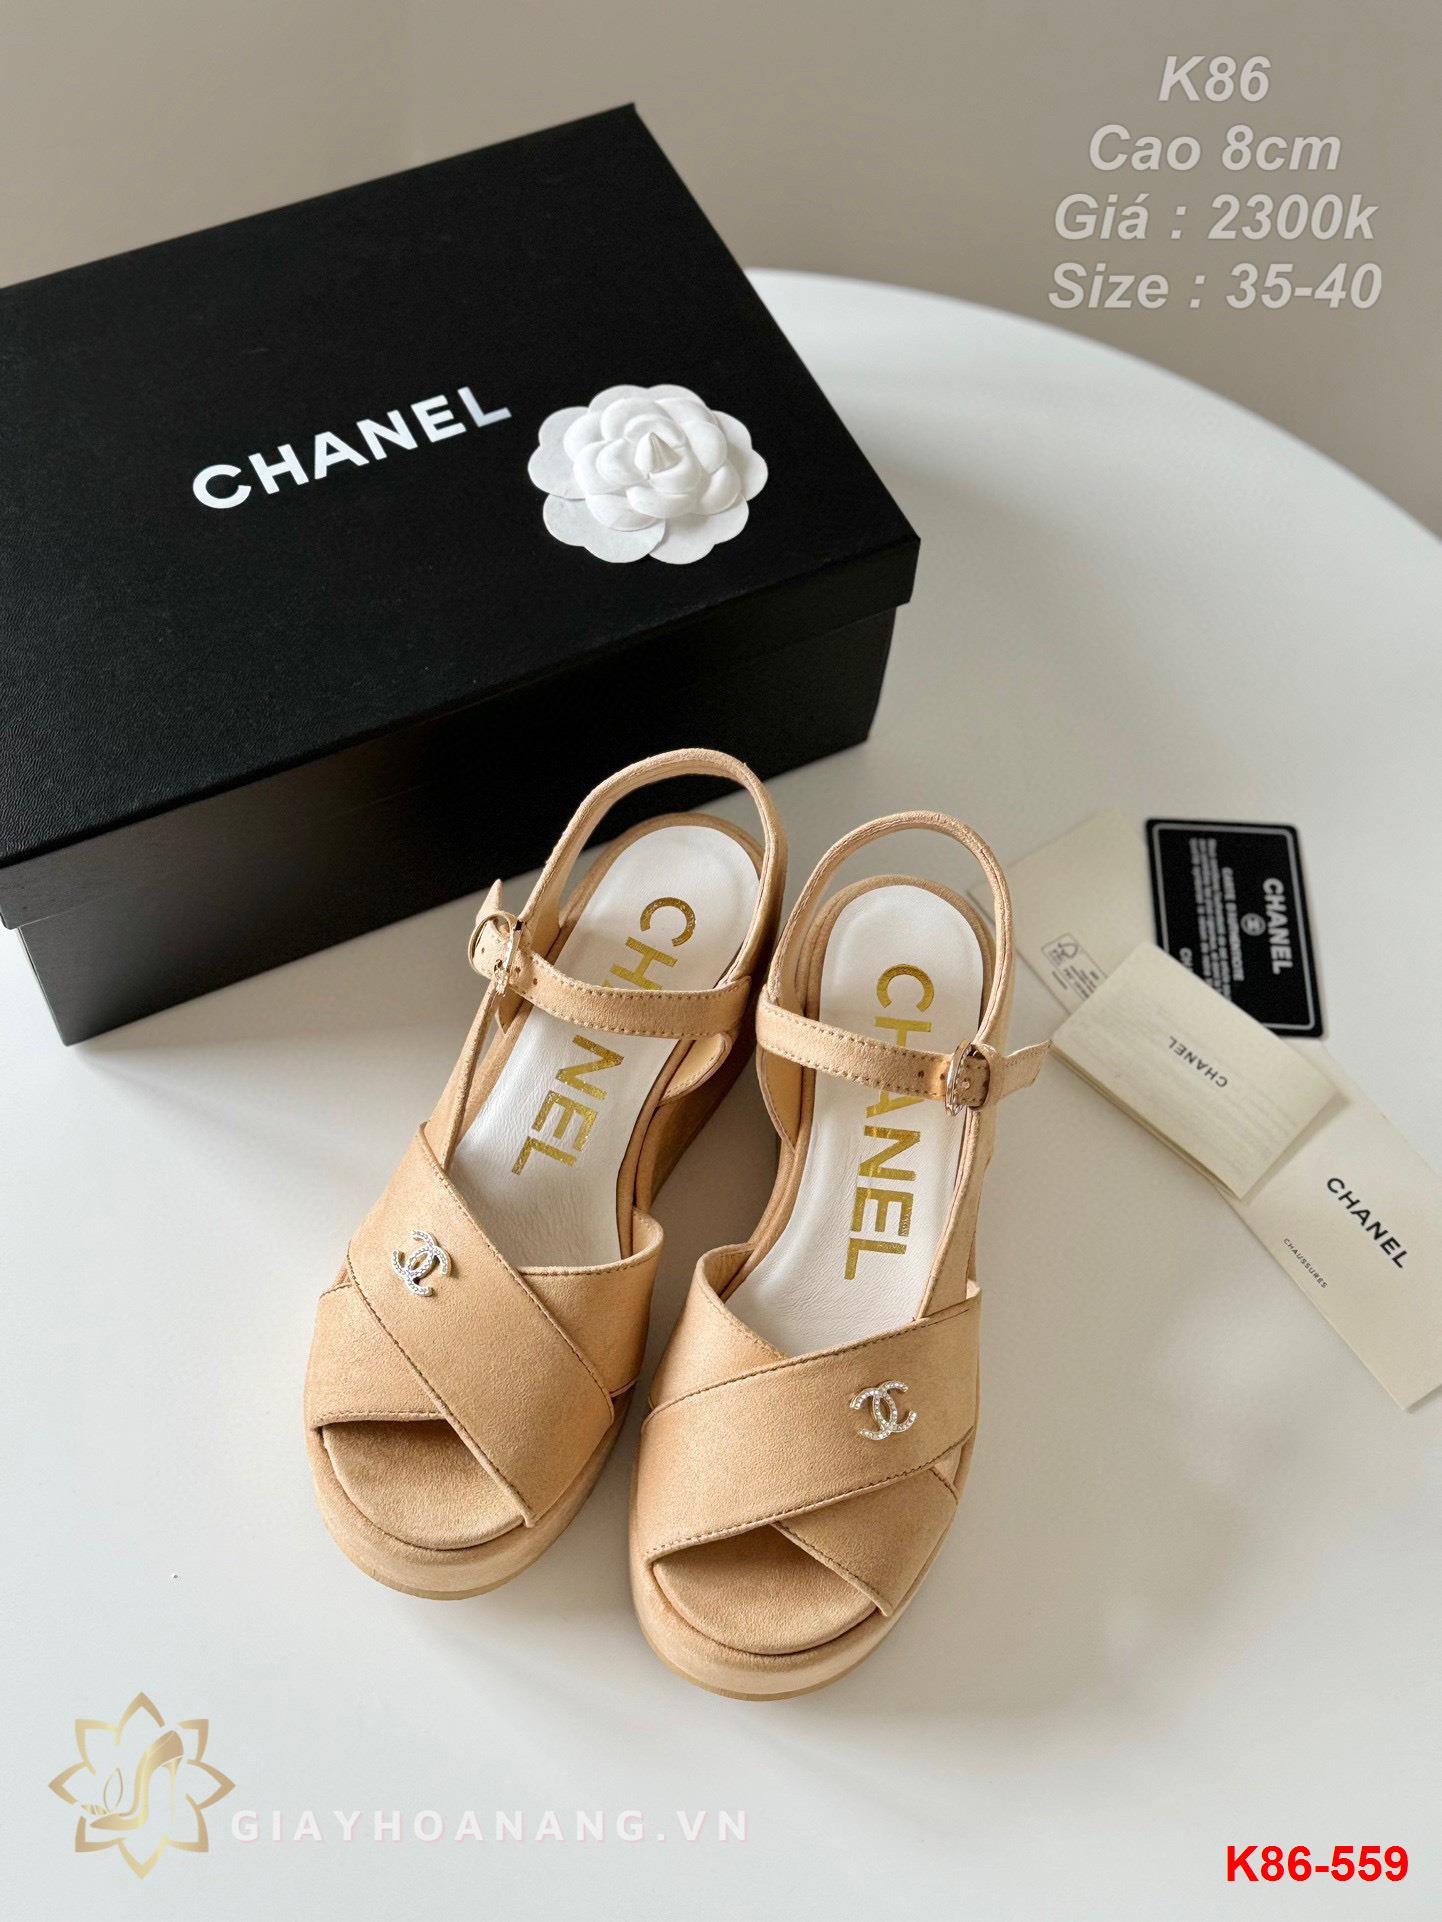 K86-559 Chanel sandal cao 8cm siêu cấp